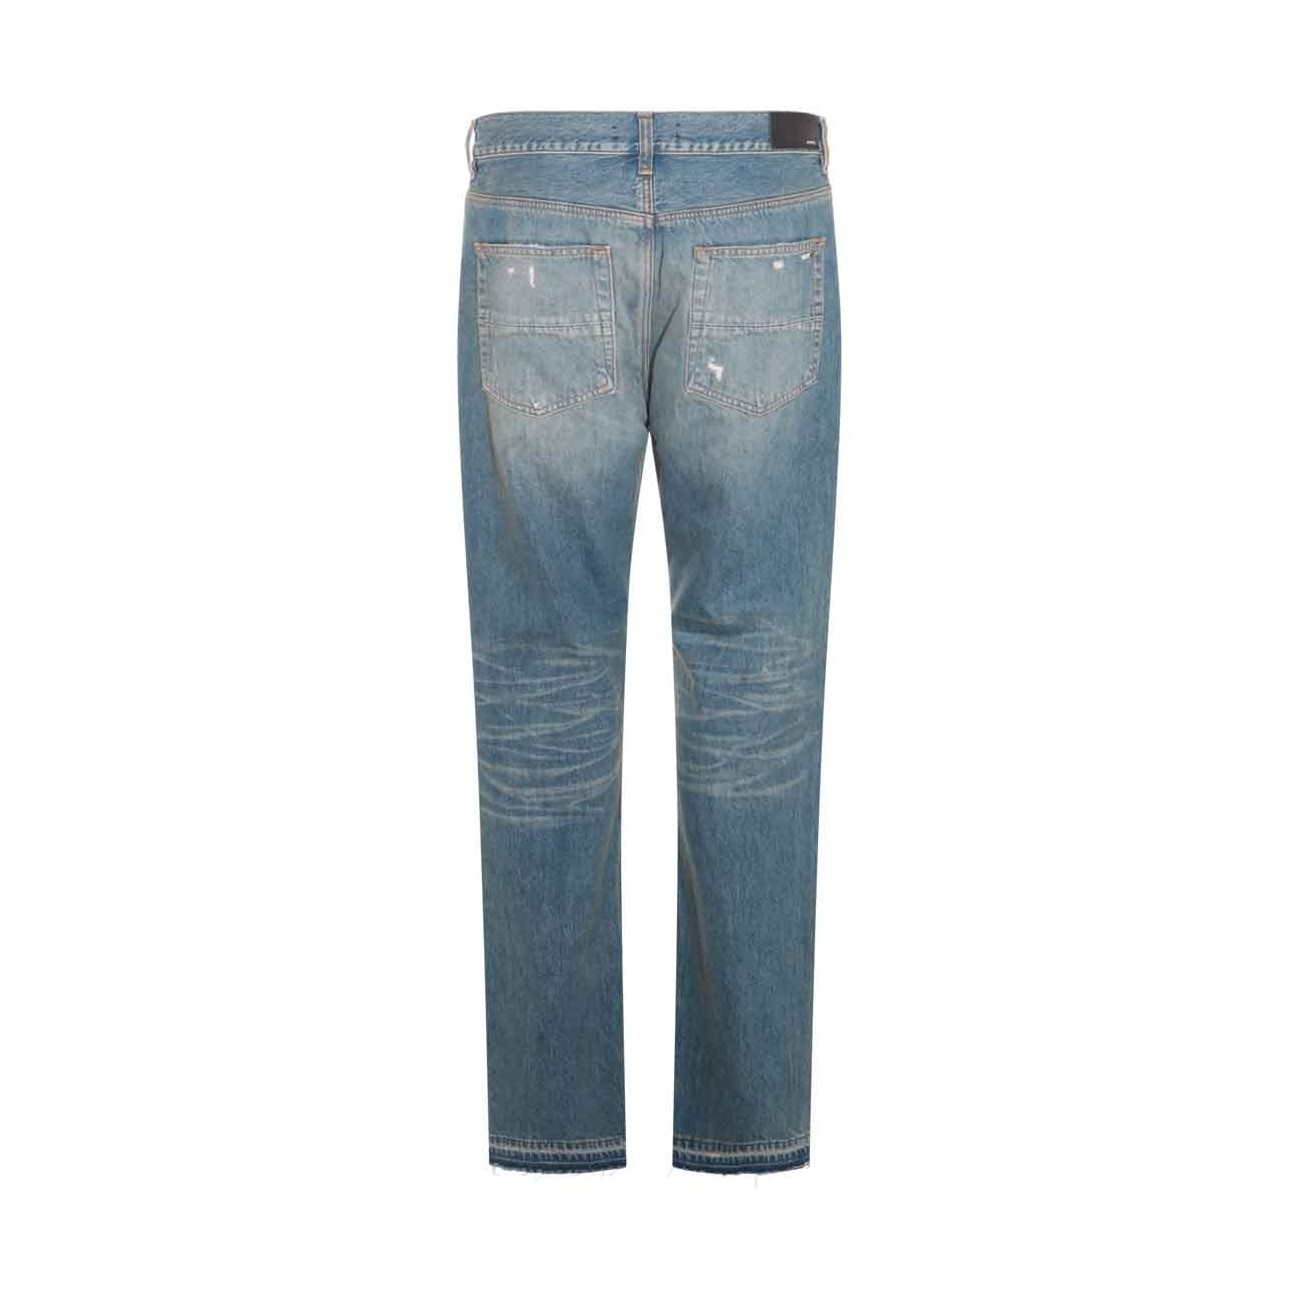 medium blue cotton jeans - 2